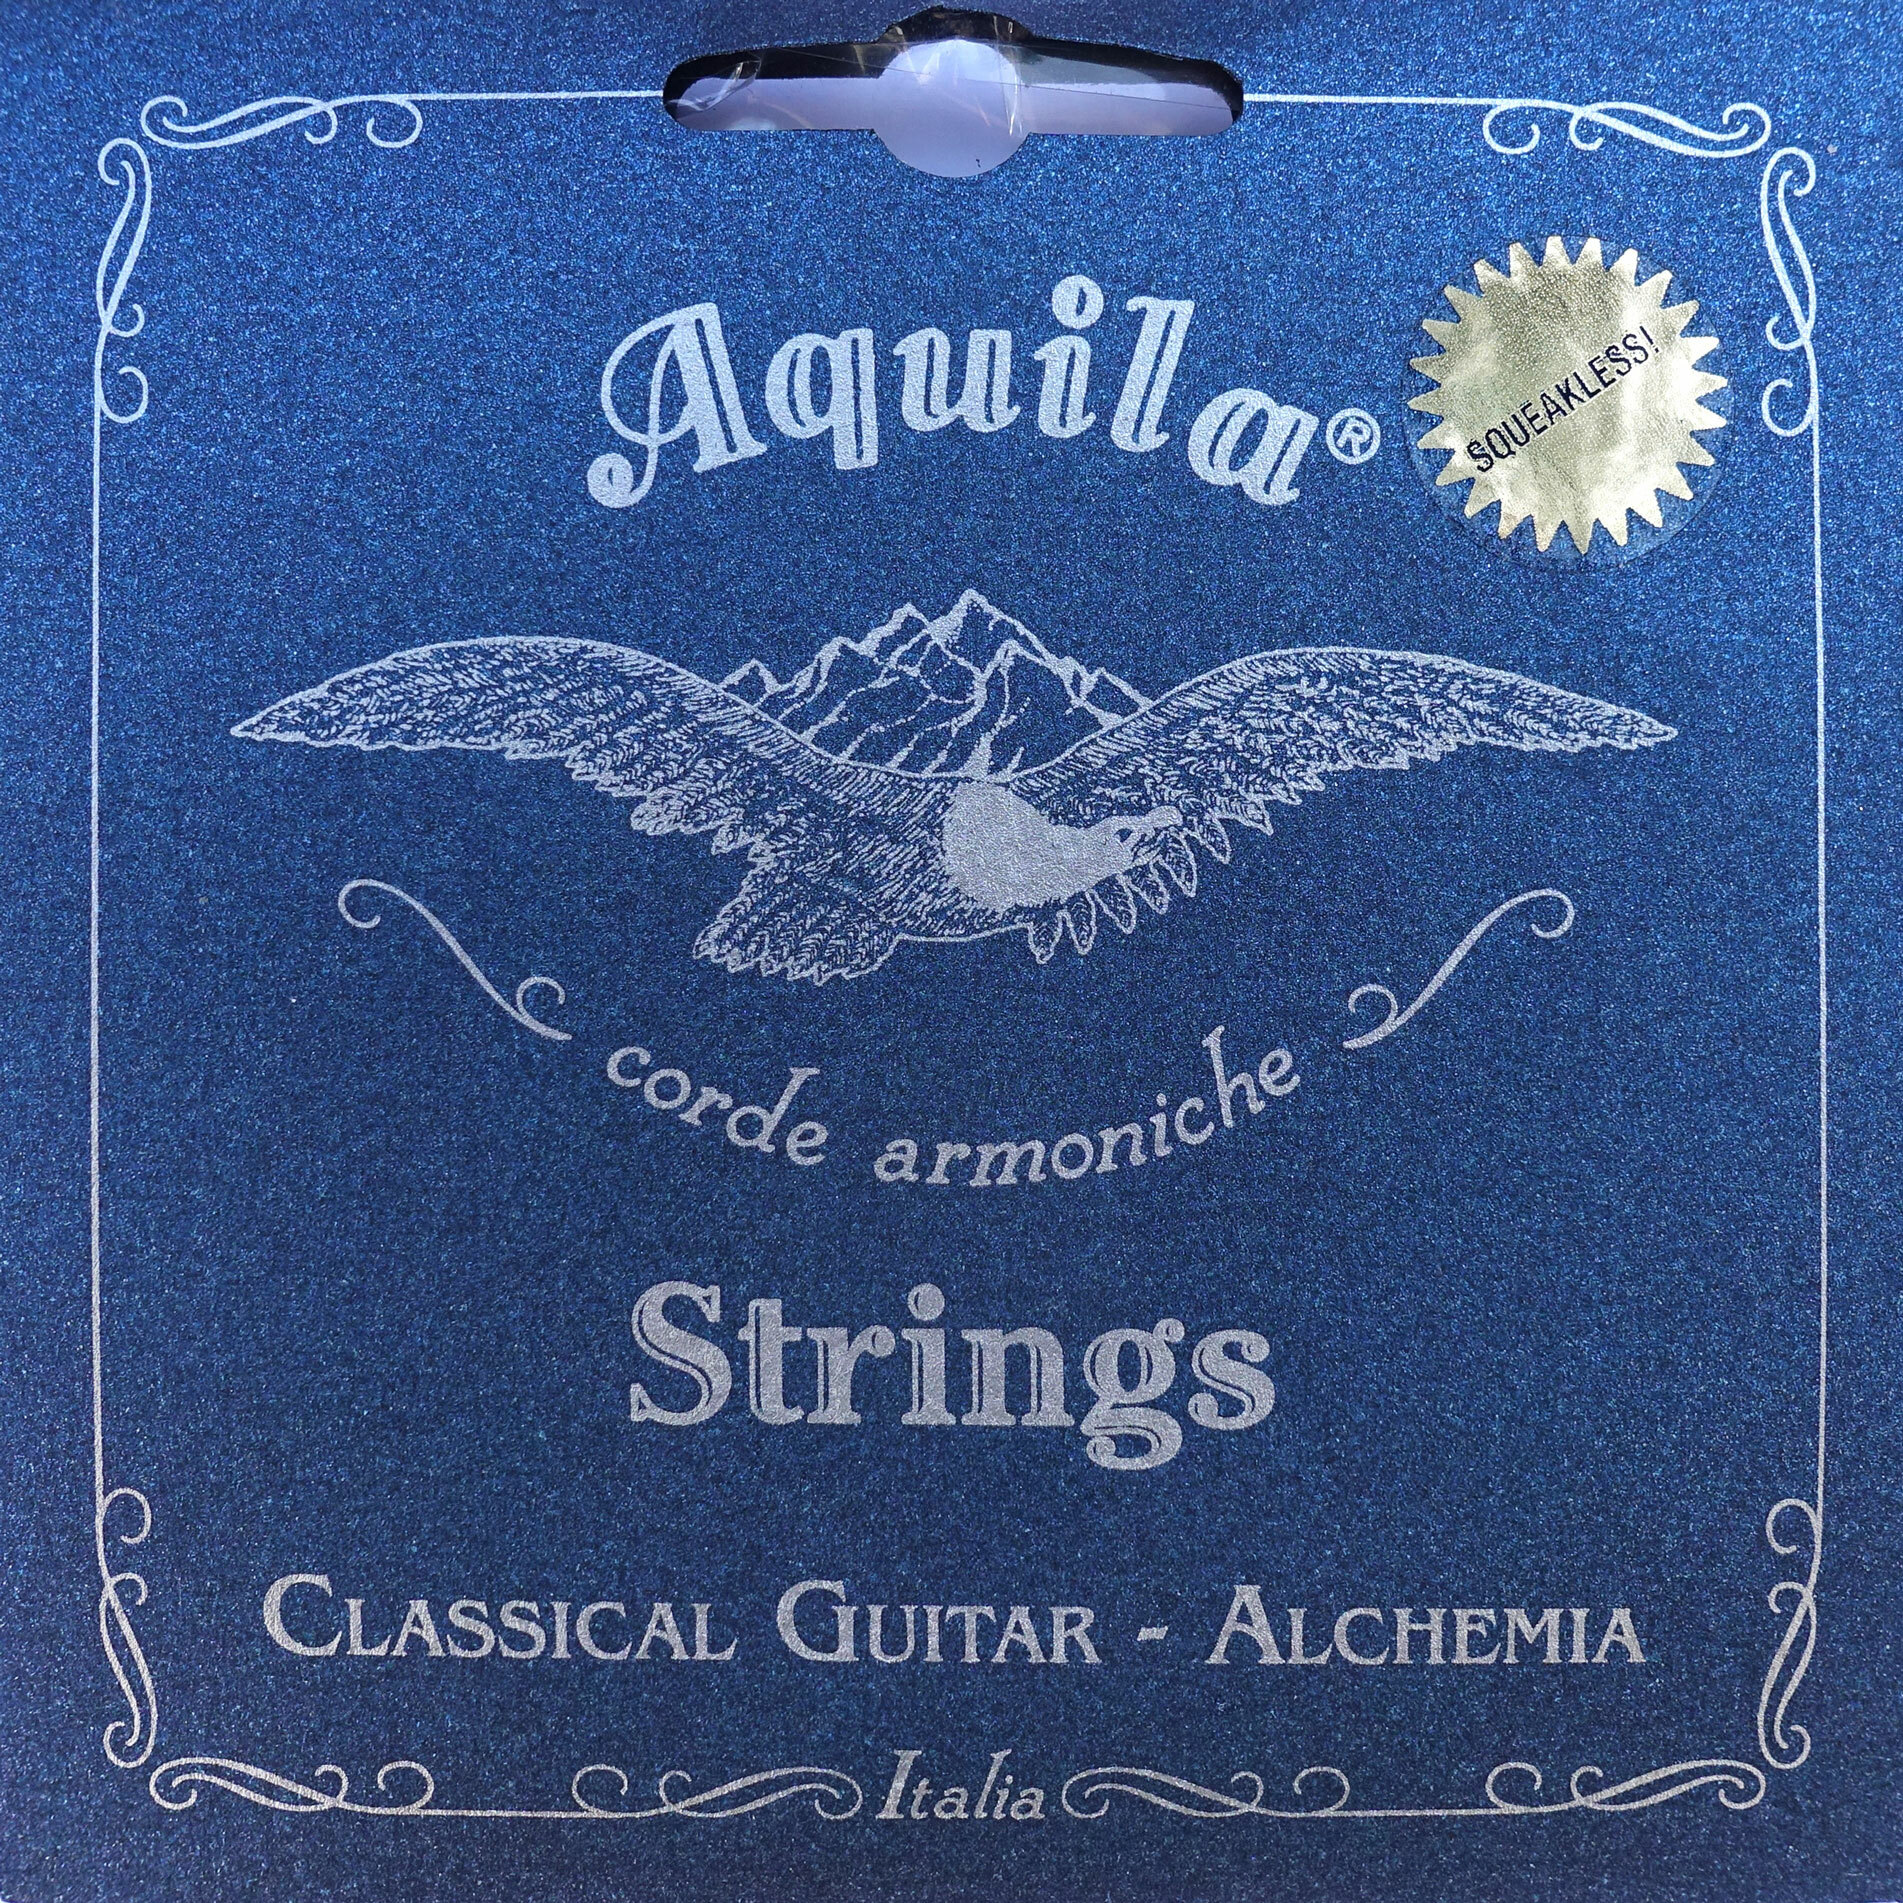 Aquila 149C - Alchemia Series, Classical Guitar Treble Strings - Superior Tension